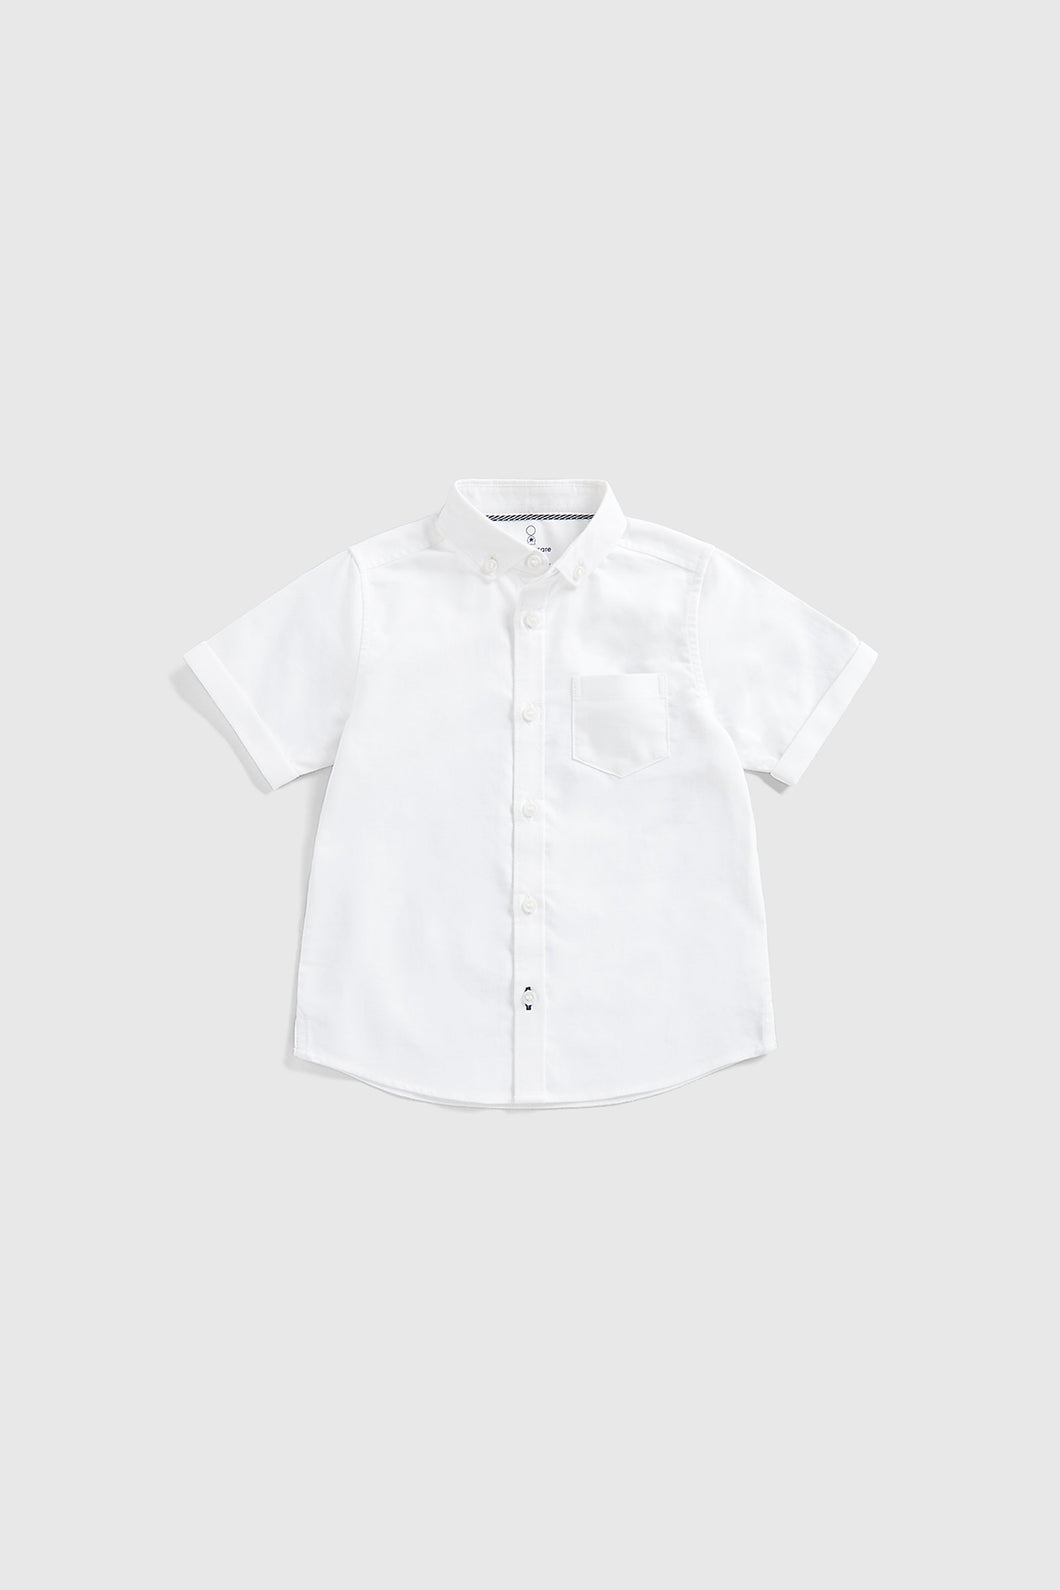 Mothercare White Oxford Shirt